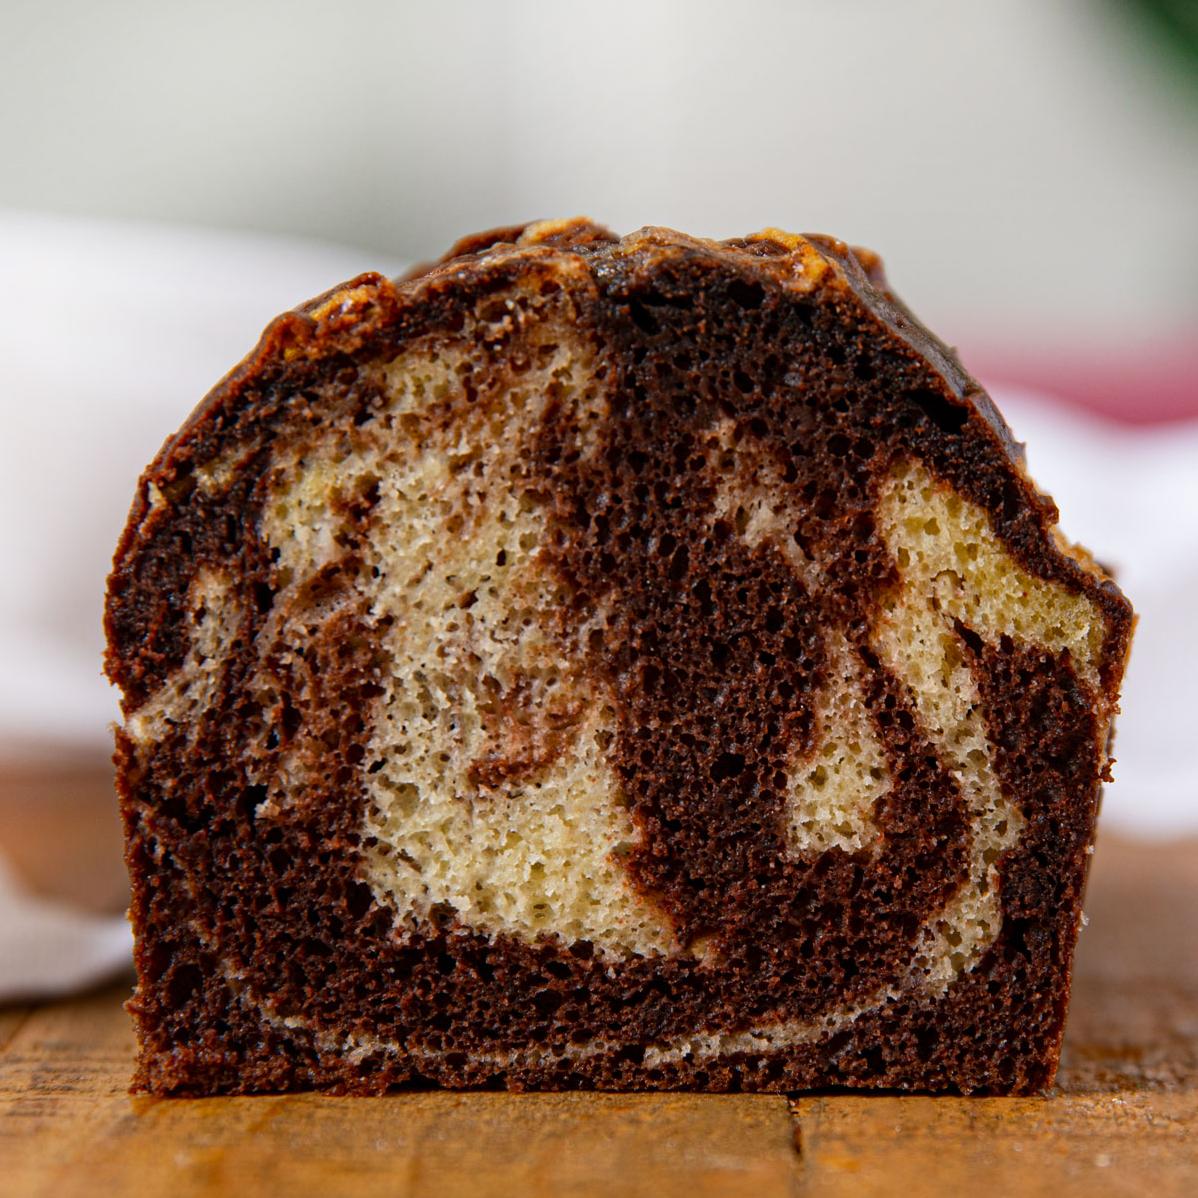  A classic pound cake with a chocolate twist.